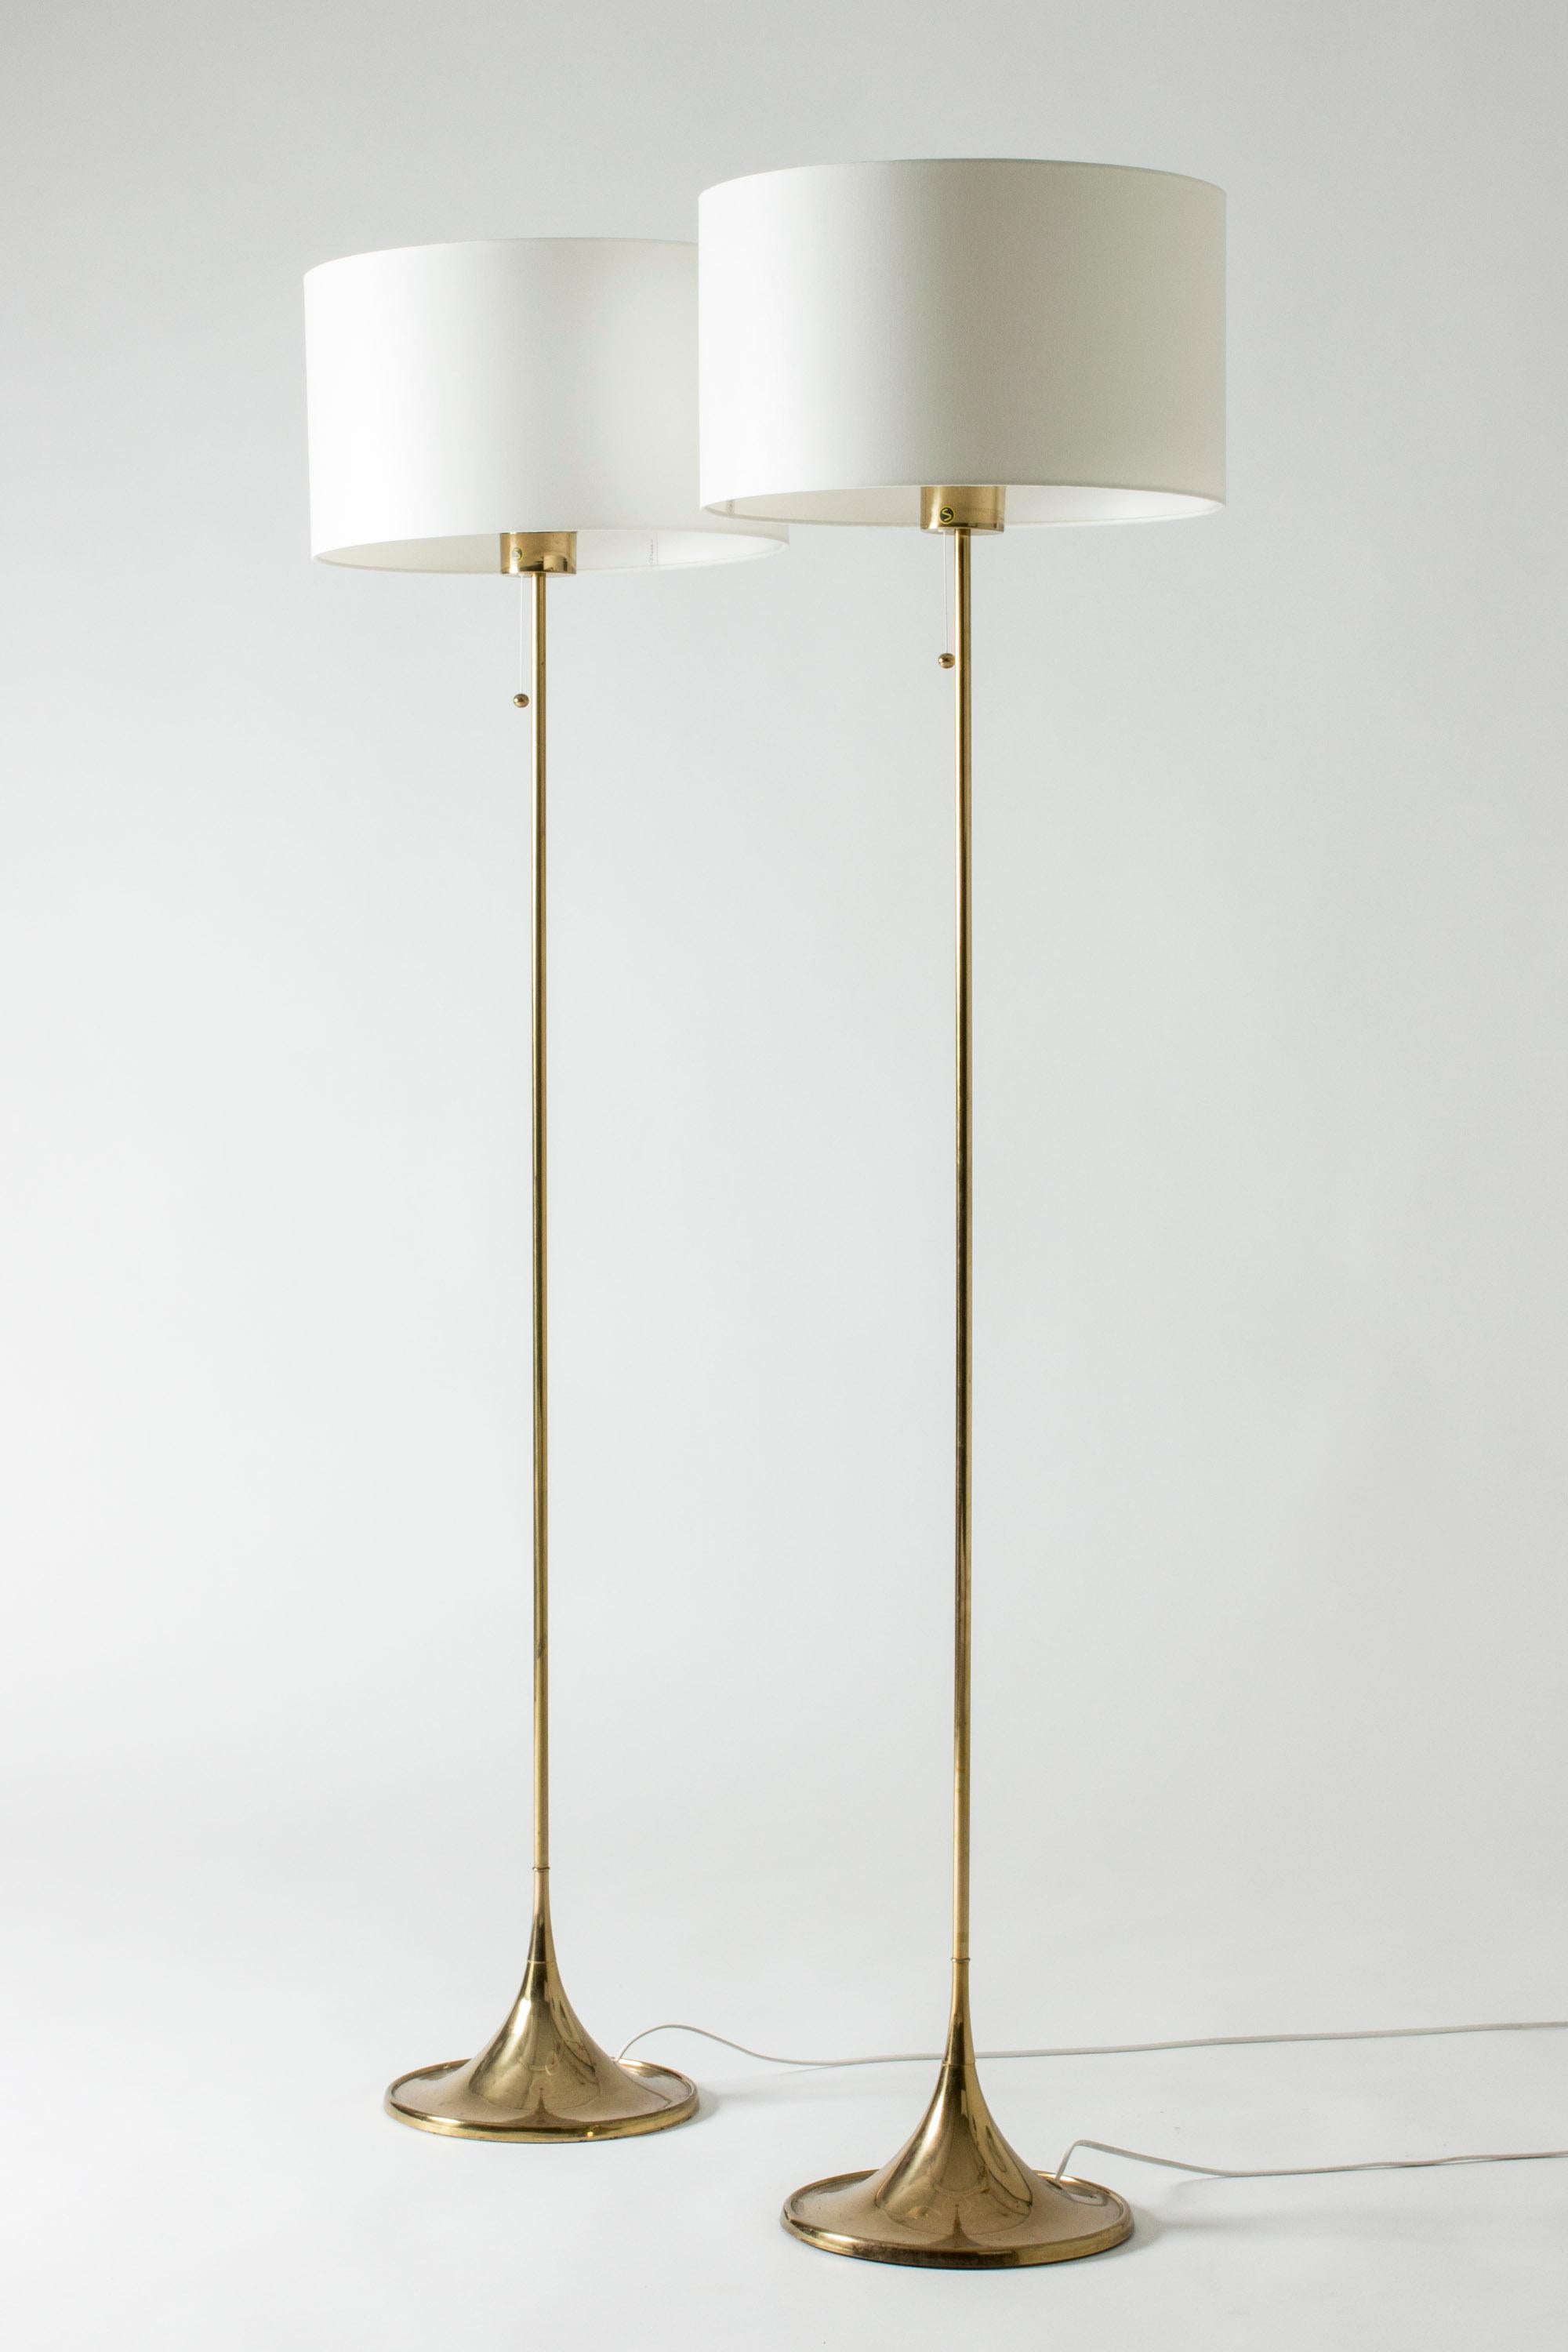 Pair of elegant brass floor lamps from Bergboms, in a sleek, elegant design. Nicely streamlined bases.